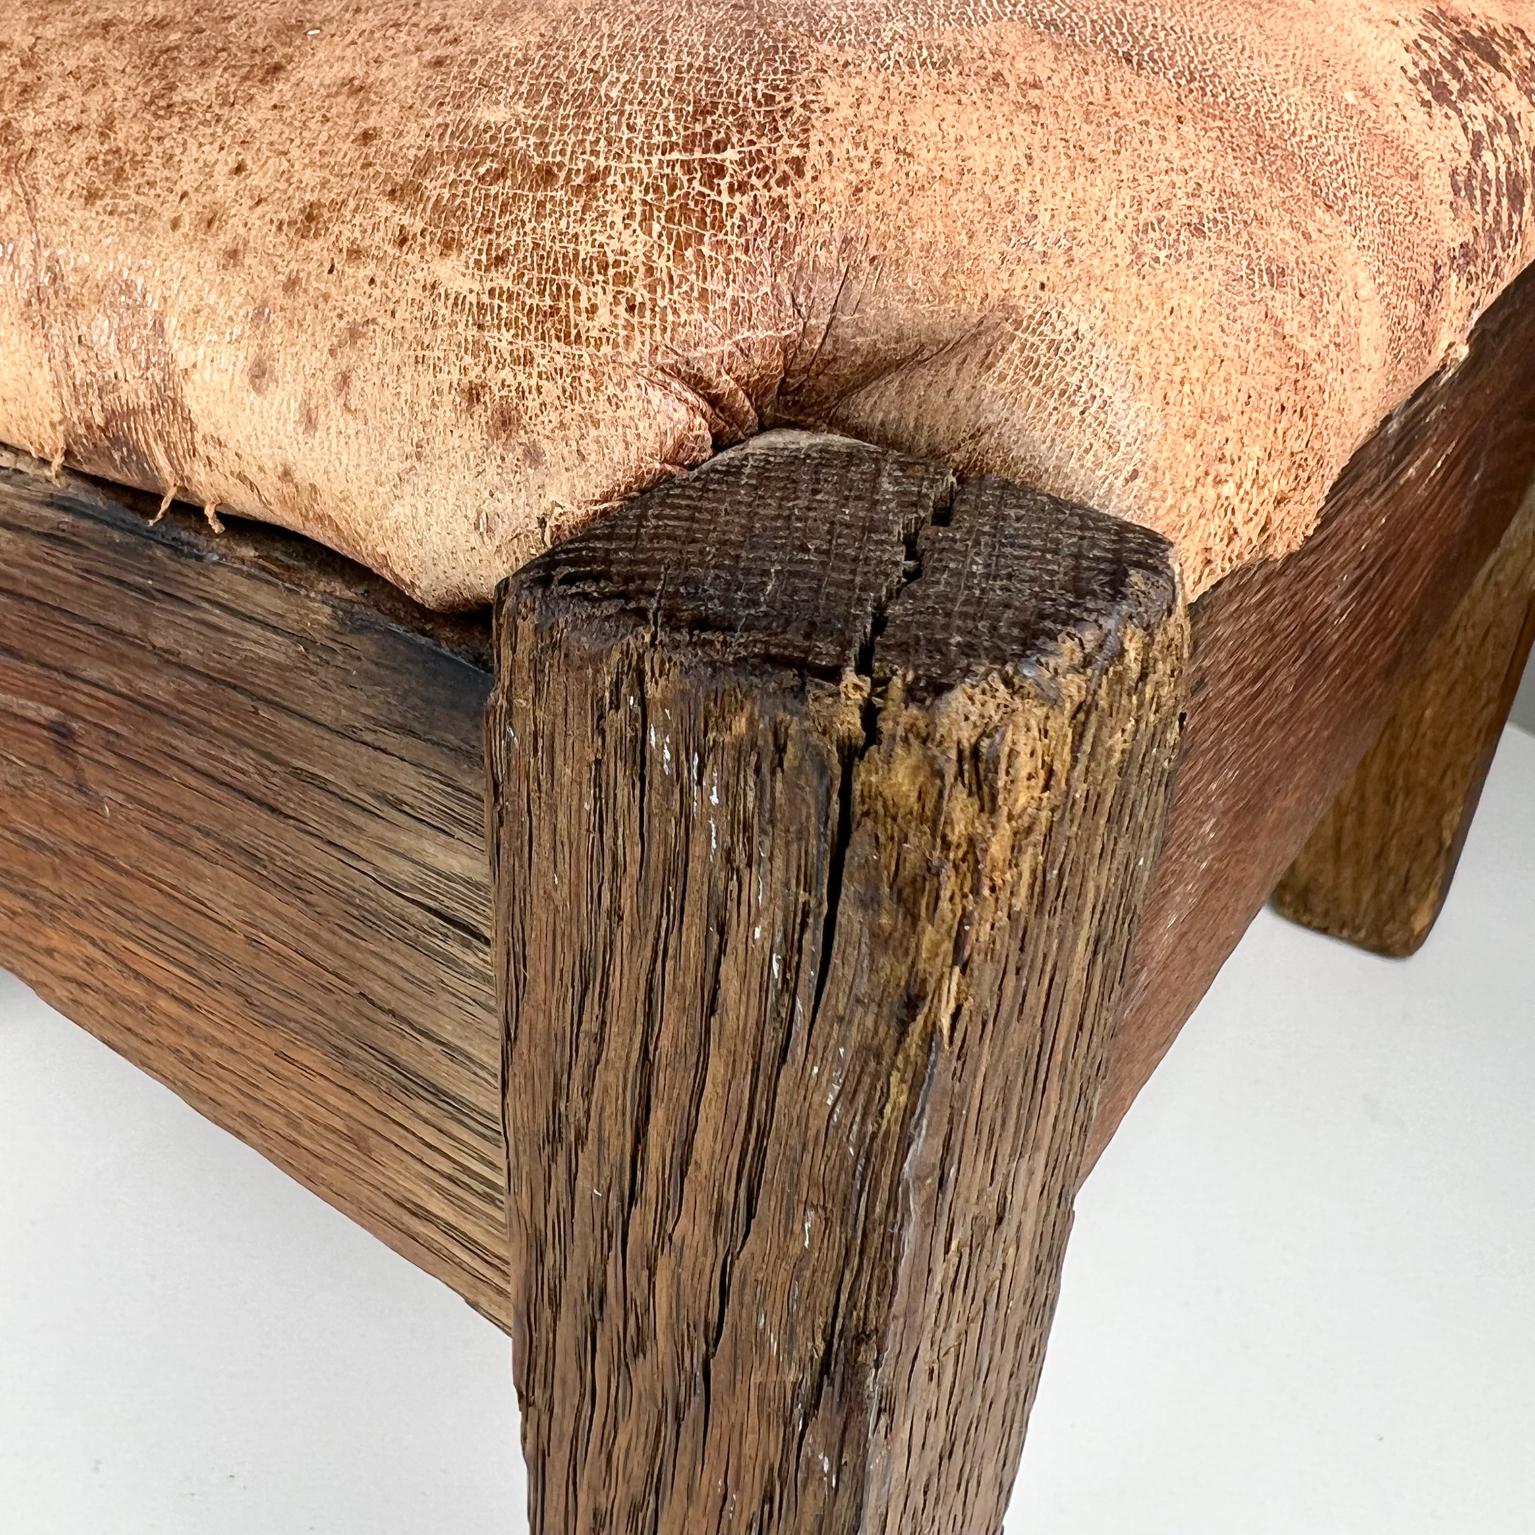 Knaus Mfg. Arts and Crafts niedriger Fußhocker aus Leder und Holz im Used-Look, Oneida, NY im Angebot 3